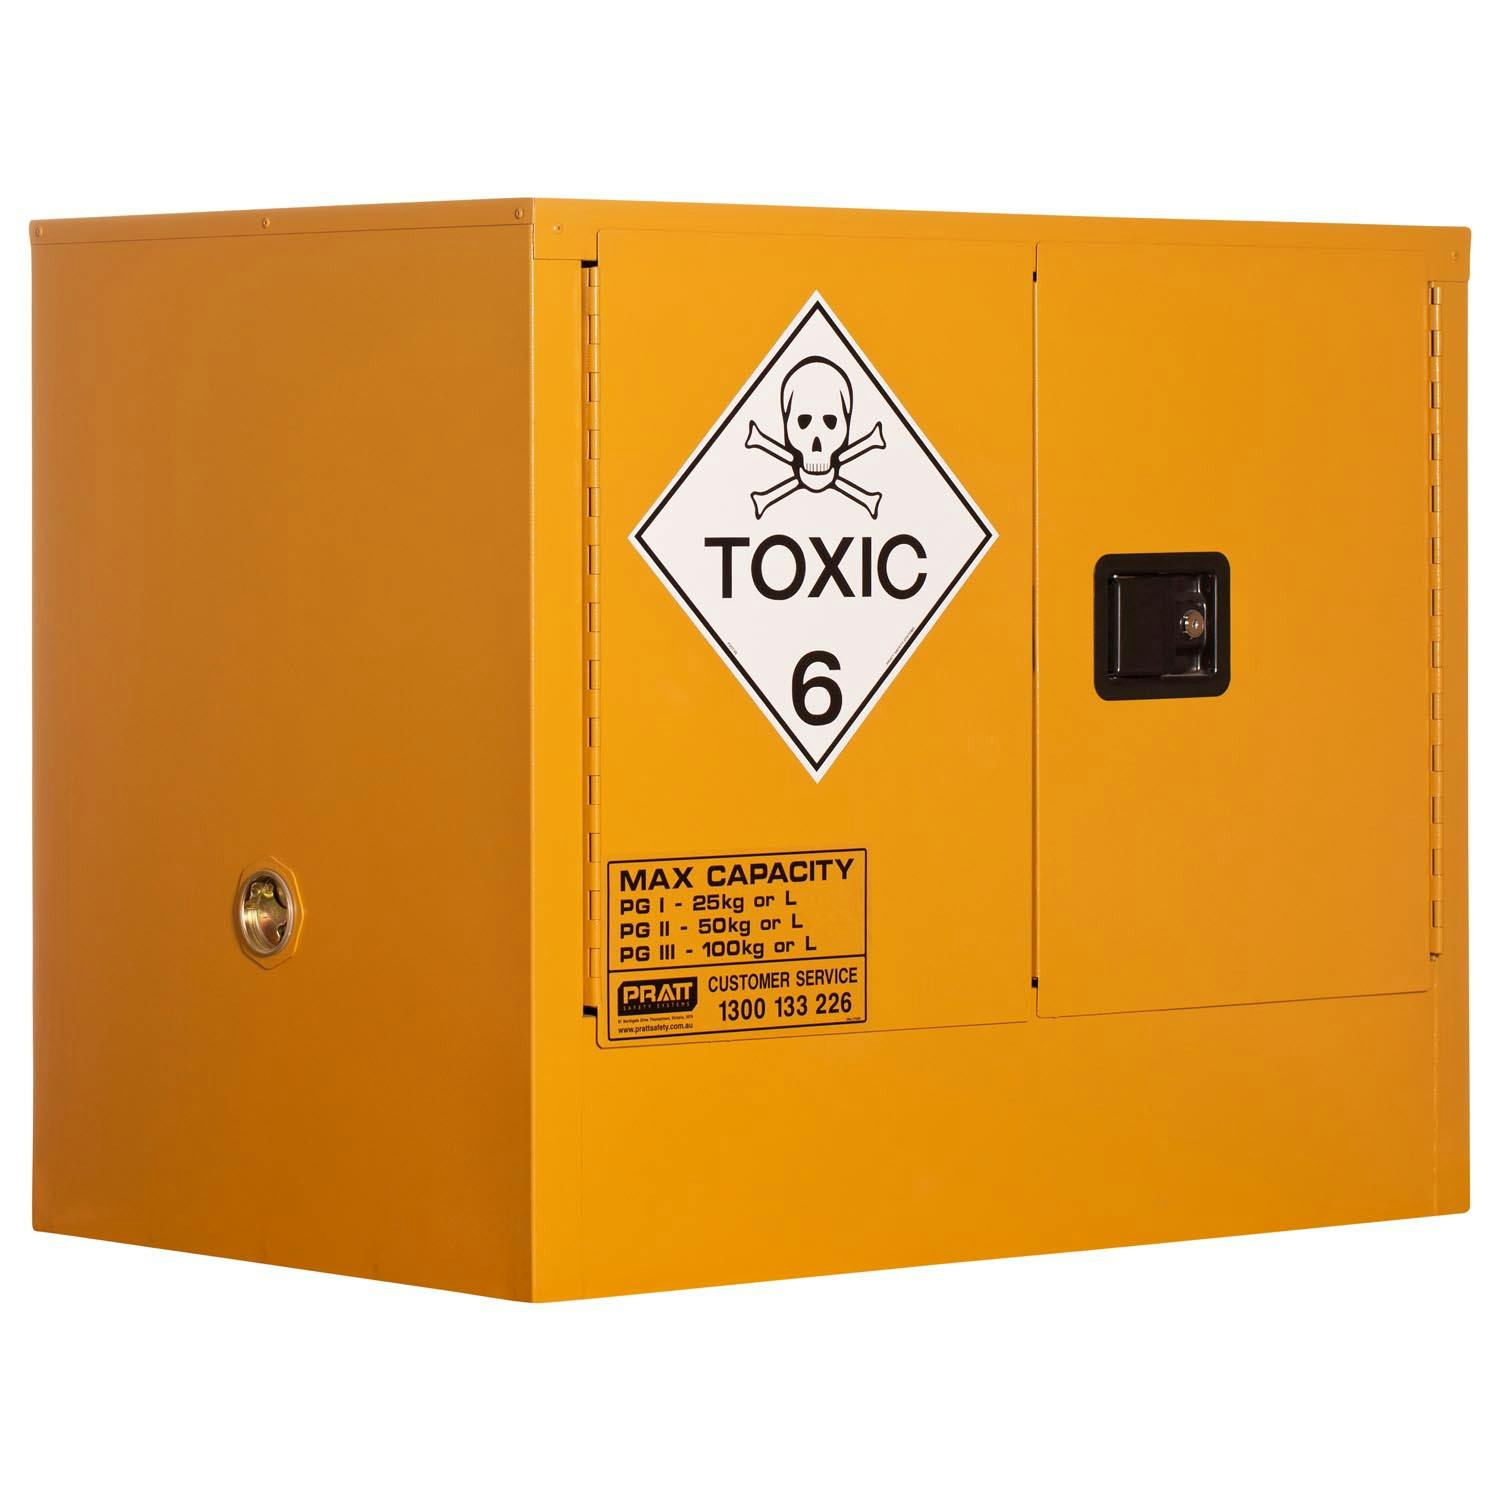 Pratt Toxic Substance Storage Cabinet: 100L - 2 Doors - 1 Shelf